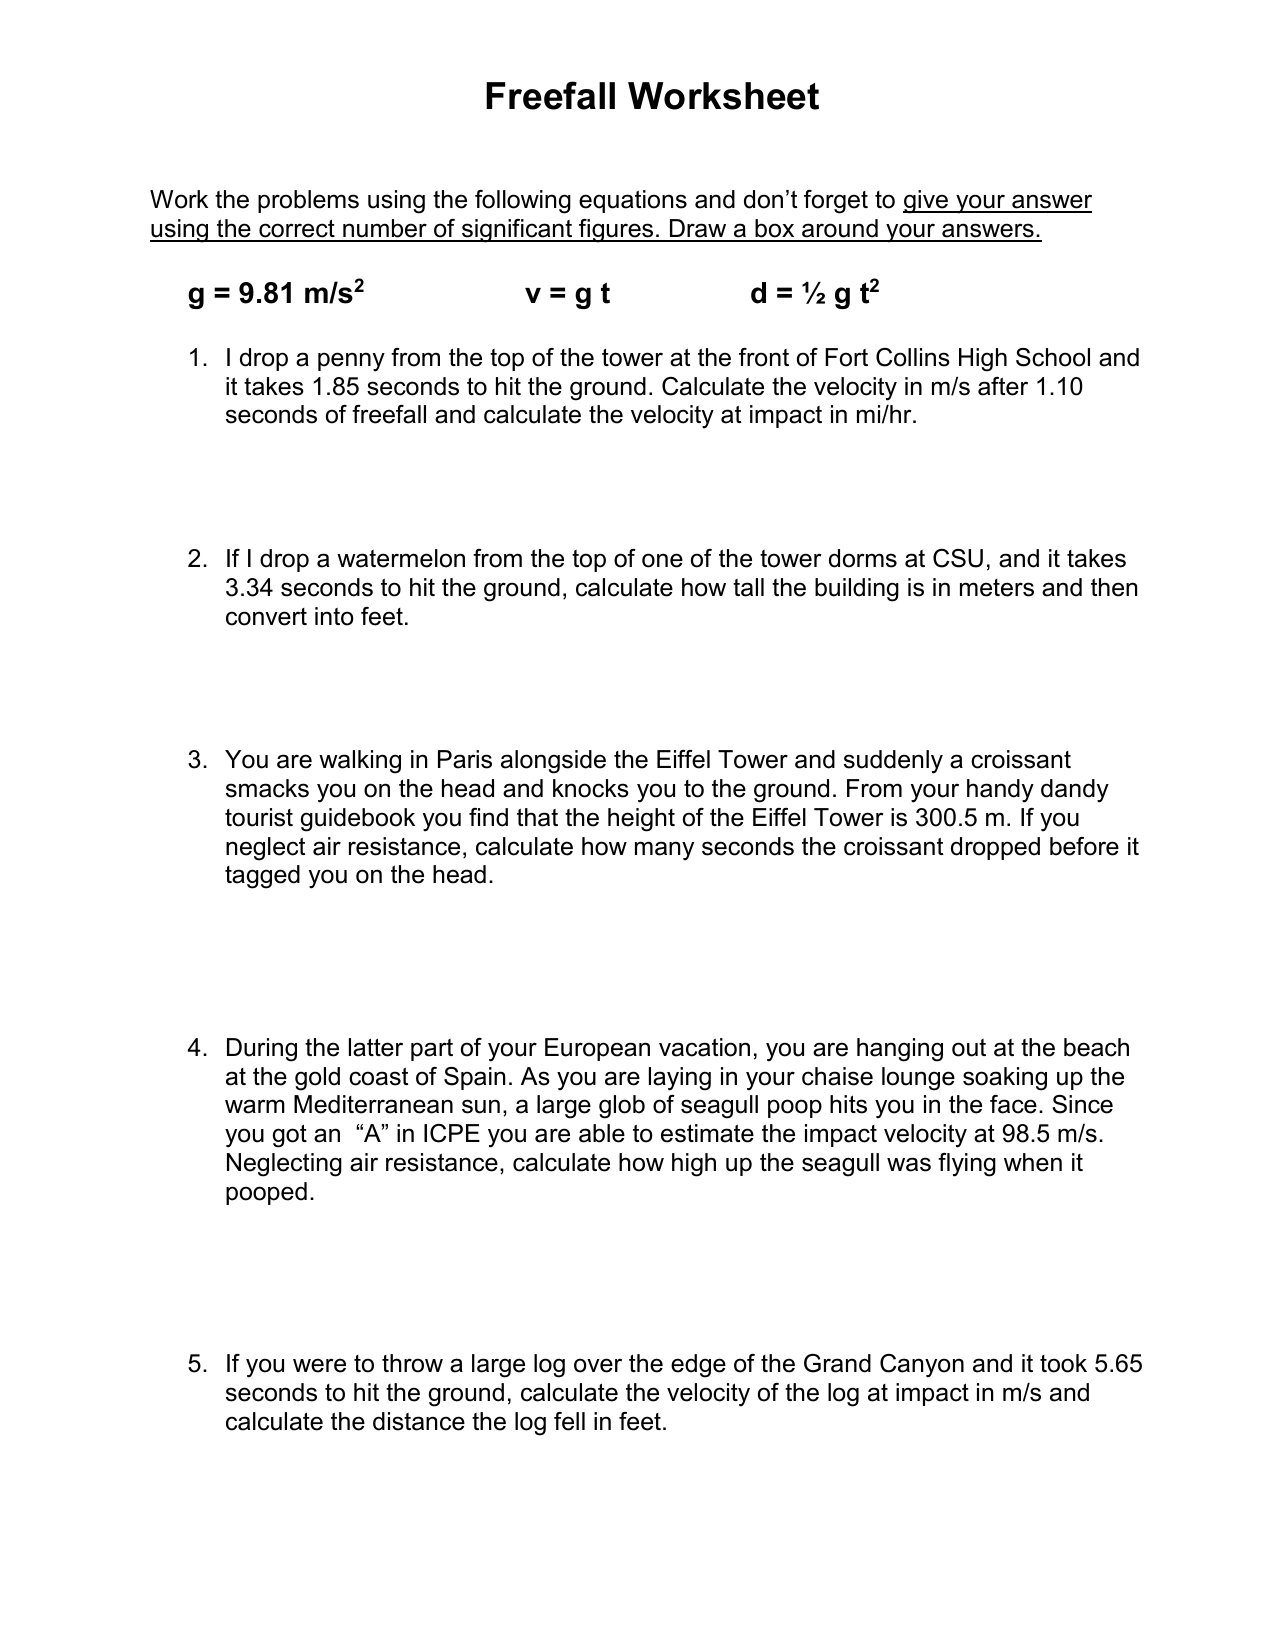 Freefall Worksheet (23) Inside Free Fall Problems Worksheet